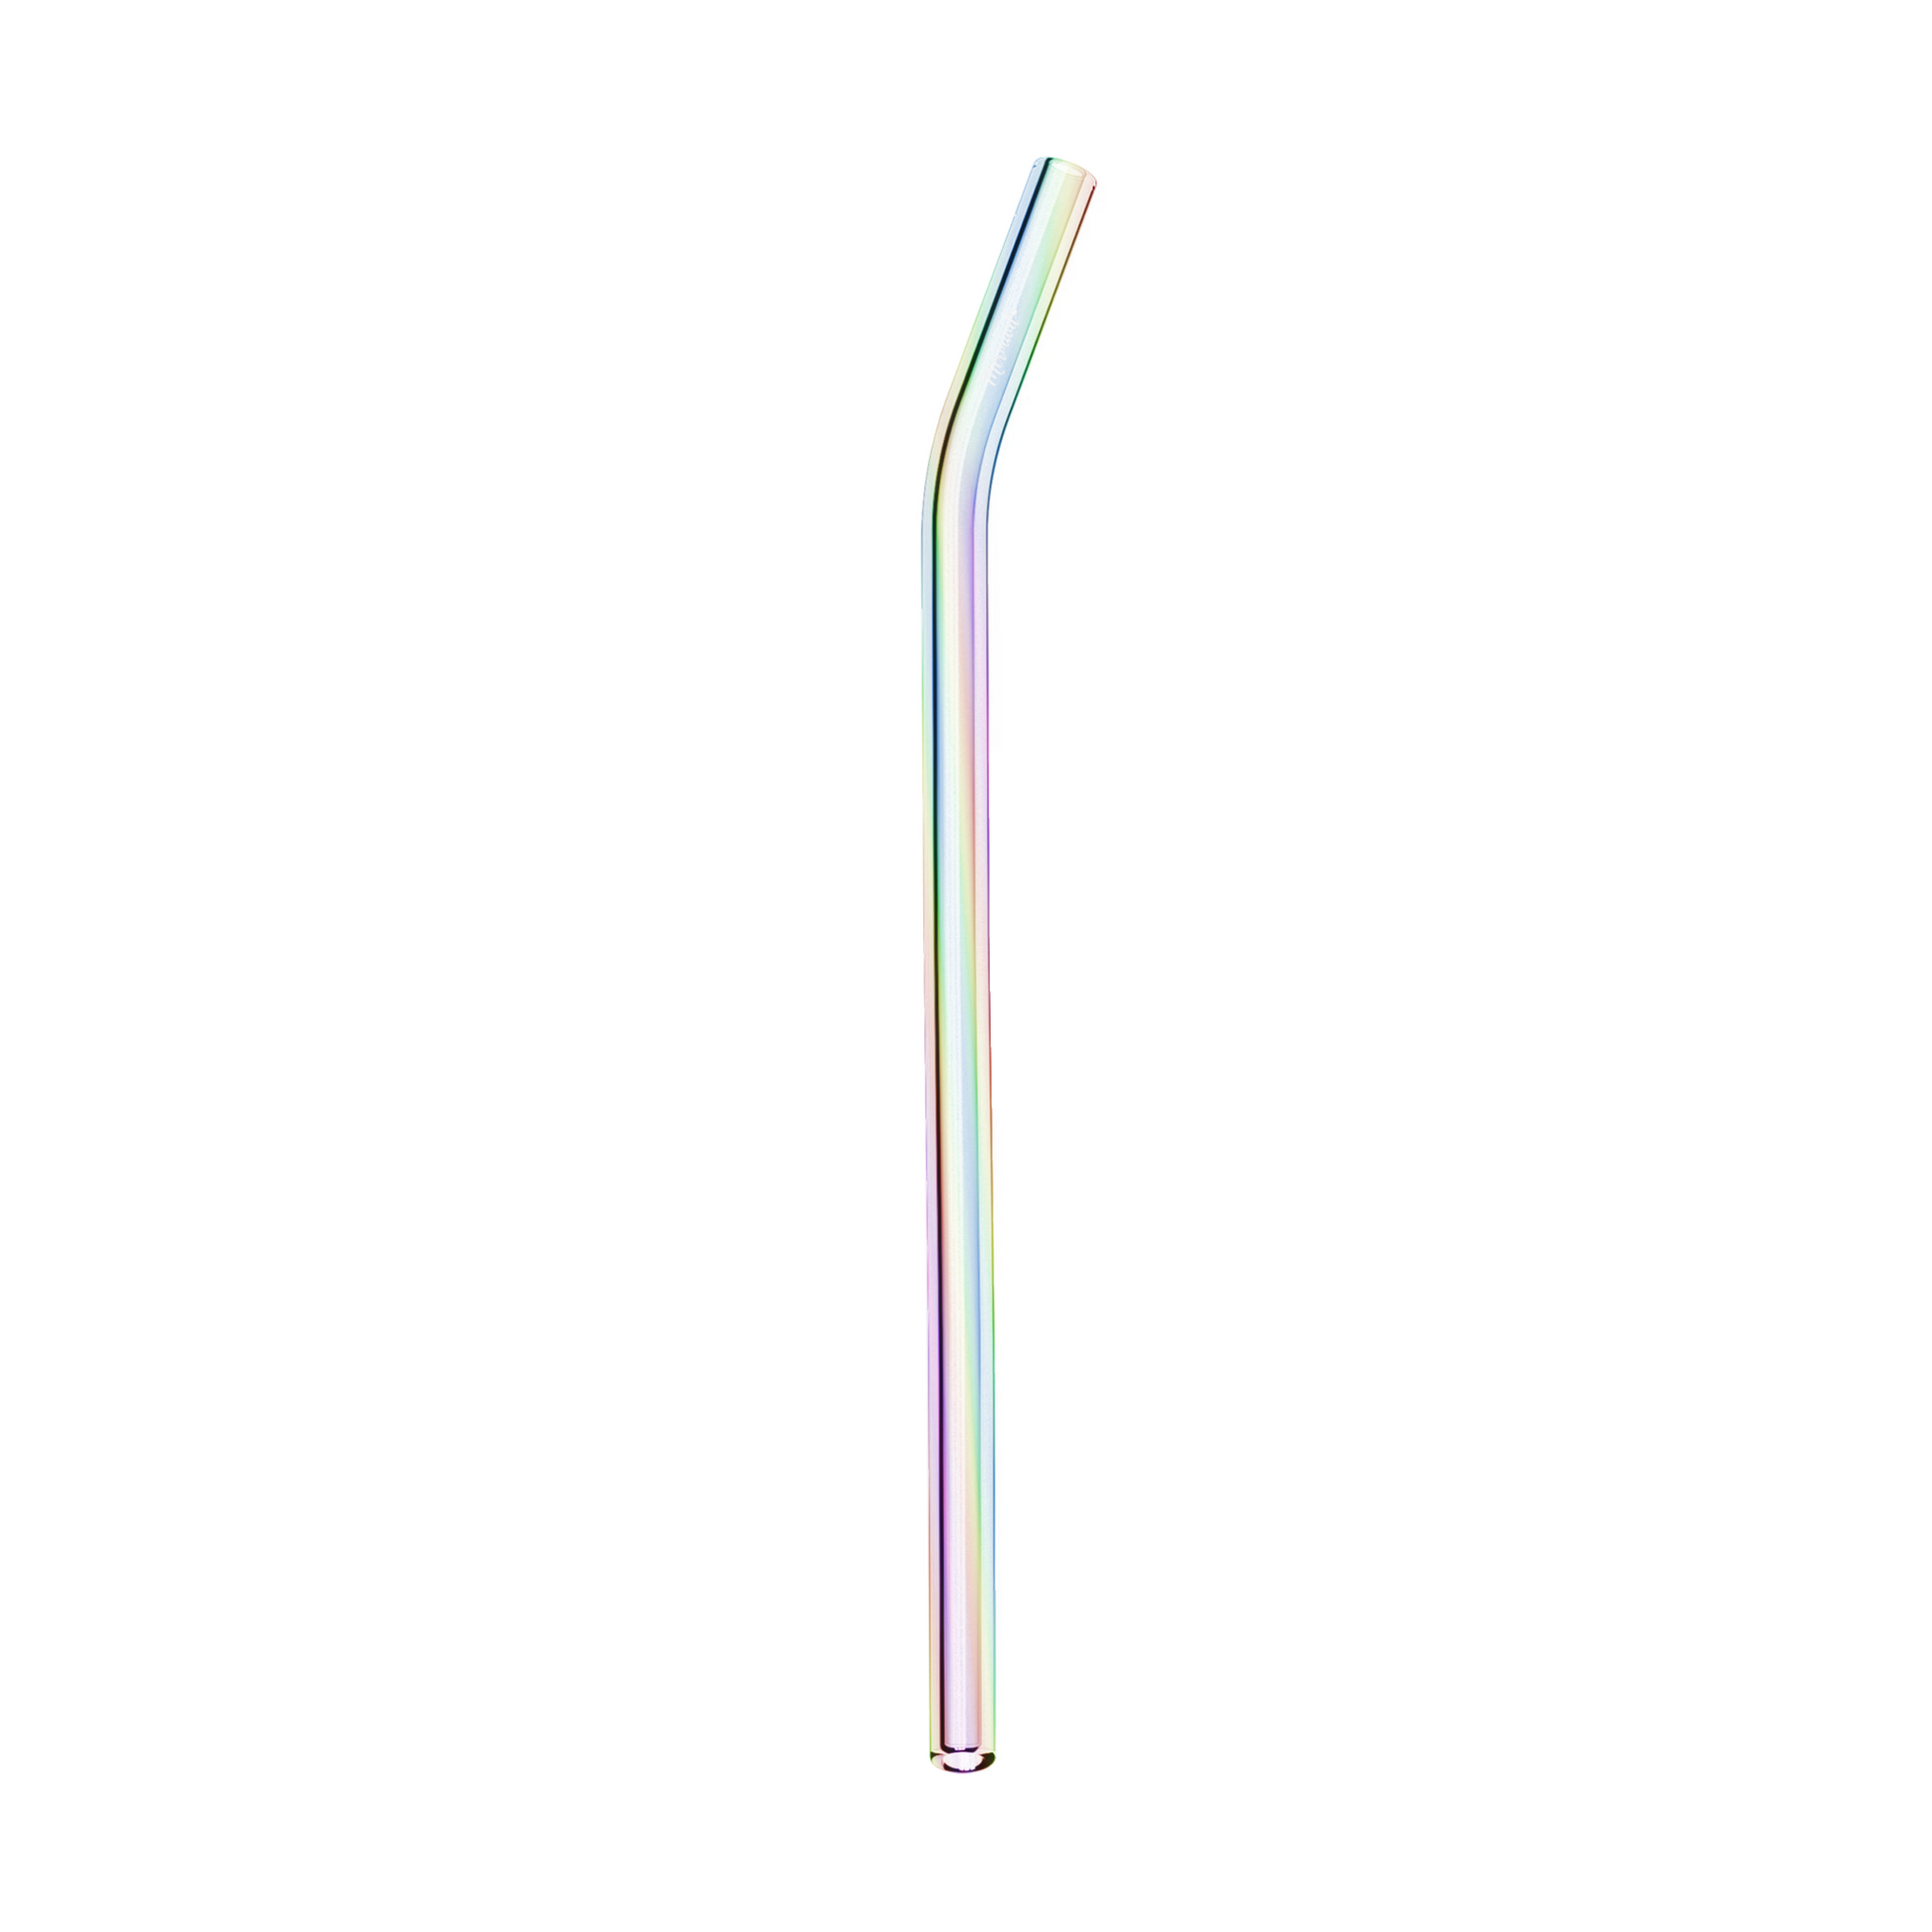 Glass Straws, Mermaid Straw, Reusable Straw, mermaid glass curved single